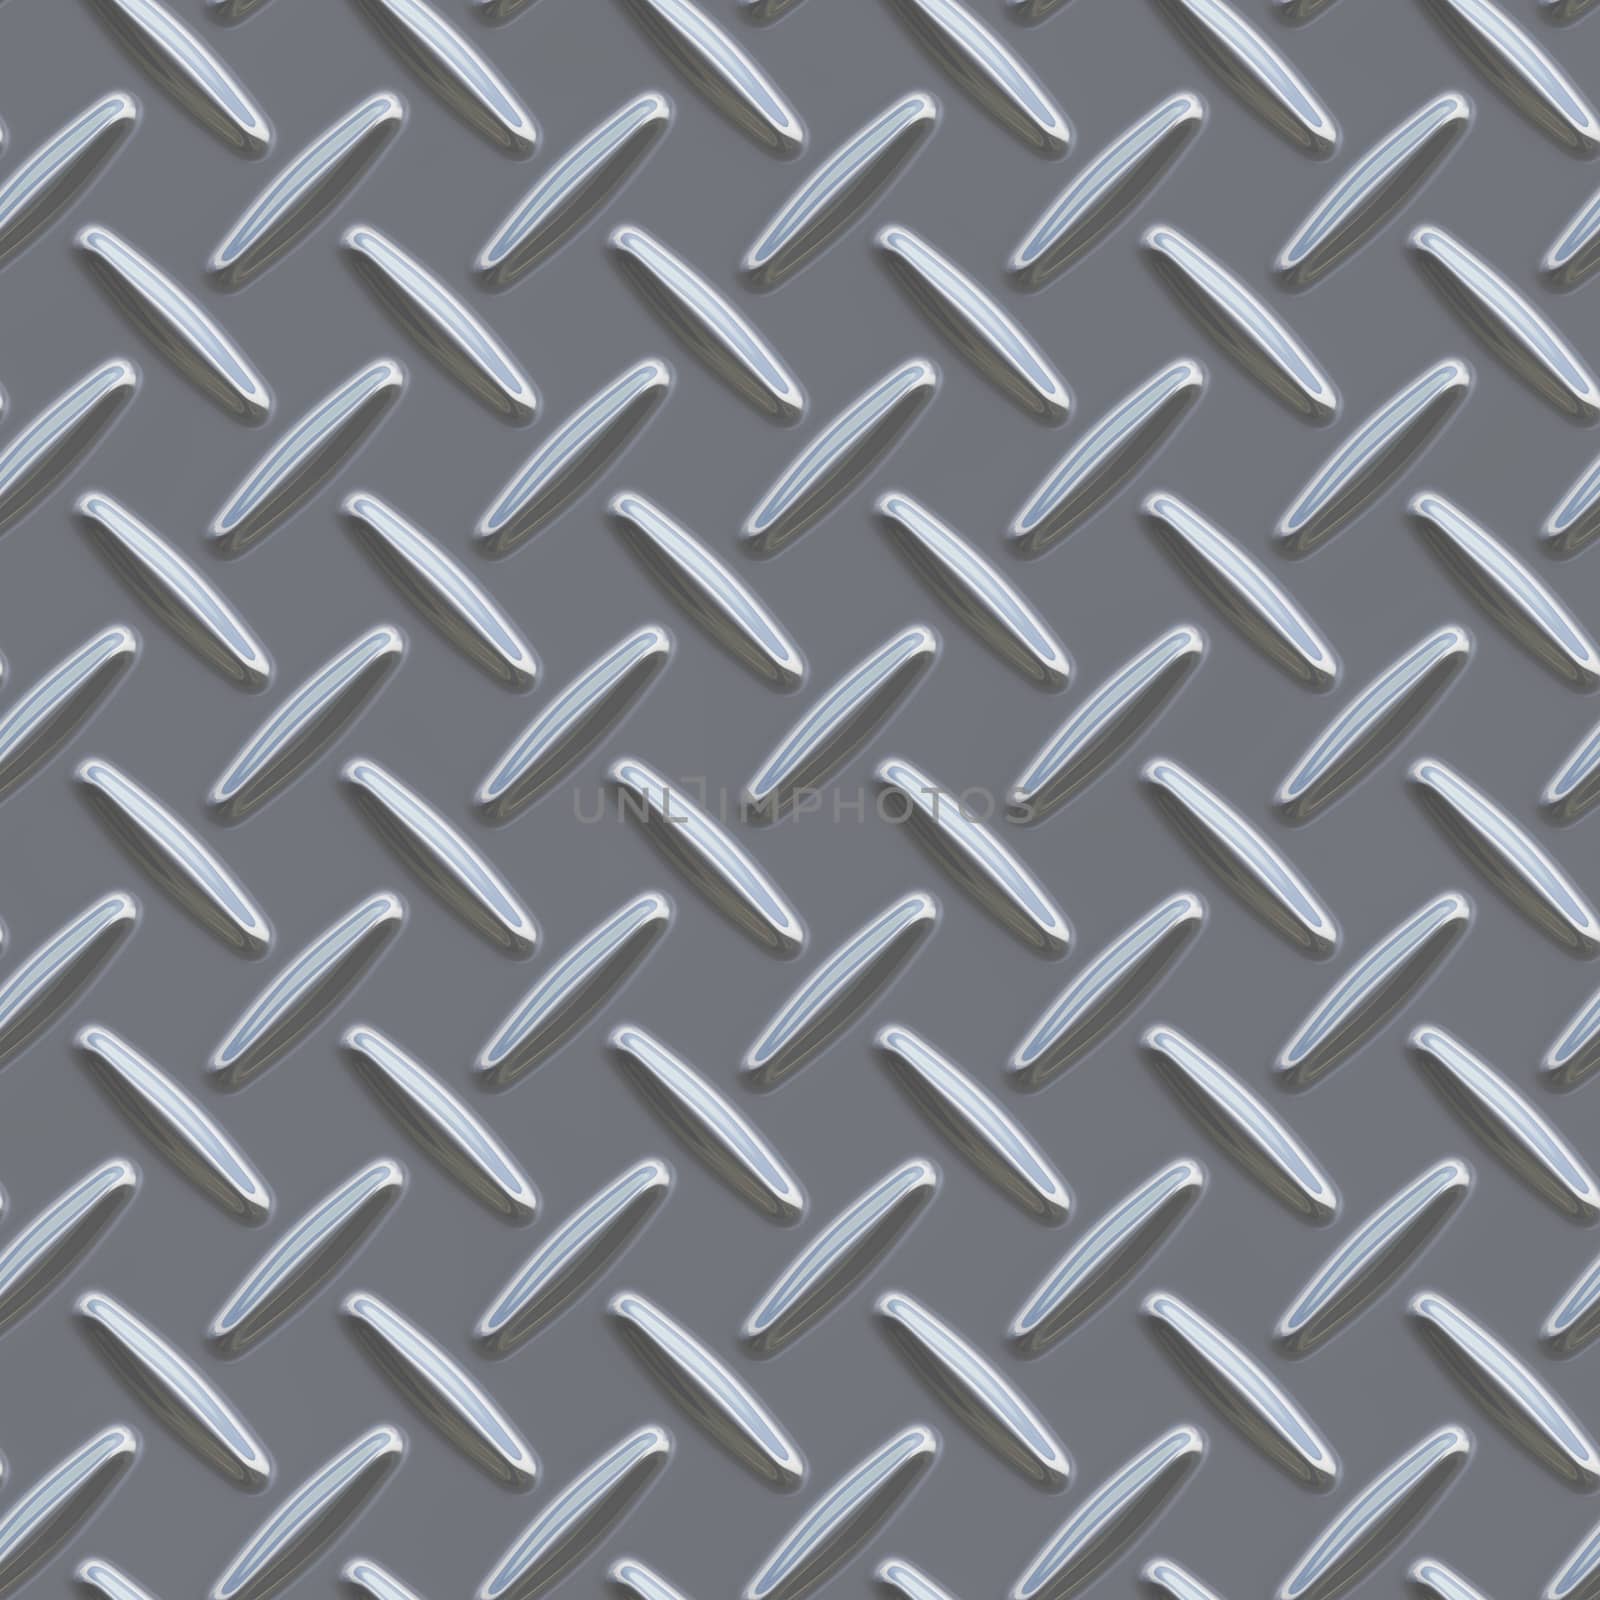 Silver gray diamond shiny metal plate seamless pattern, or texture.